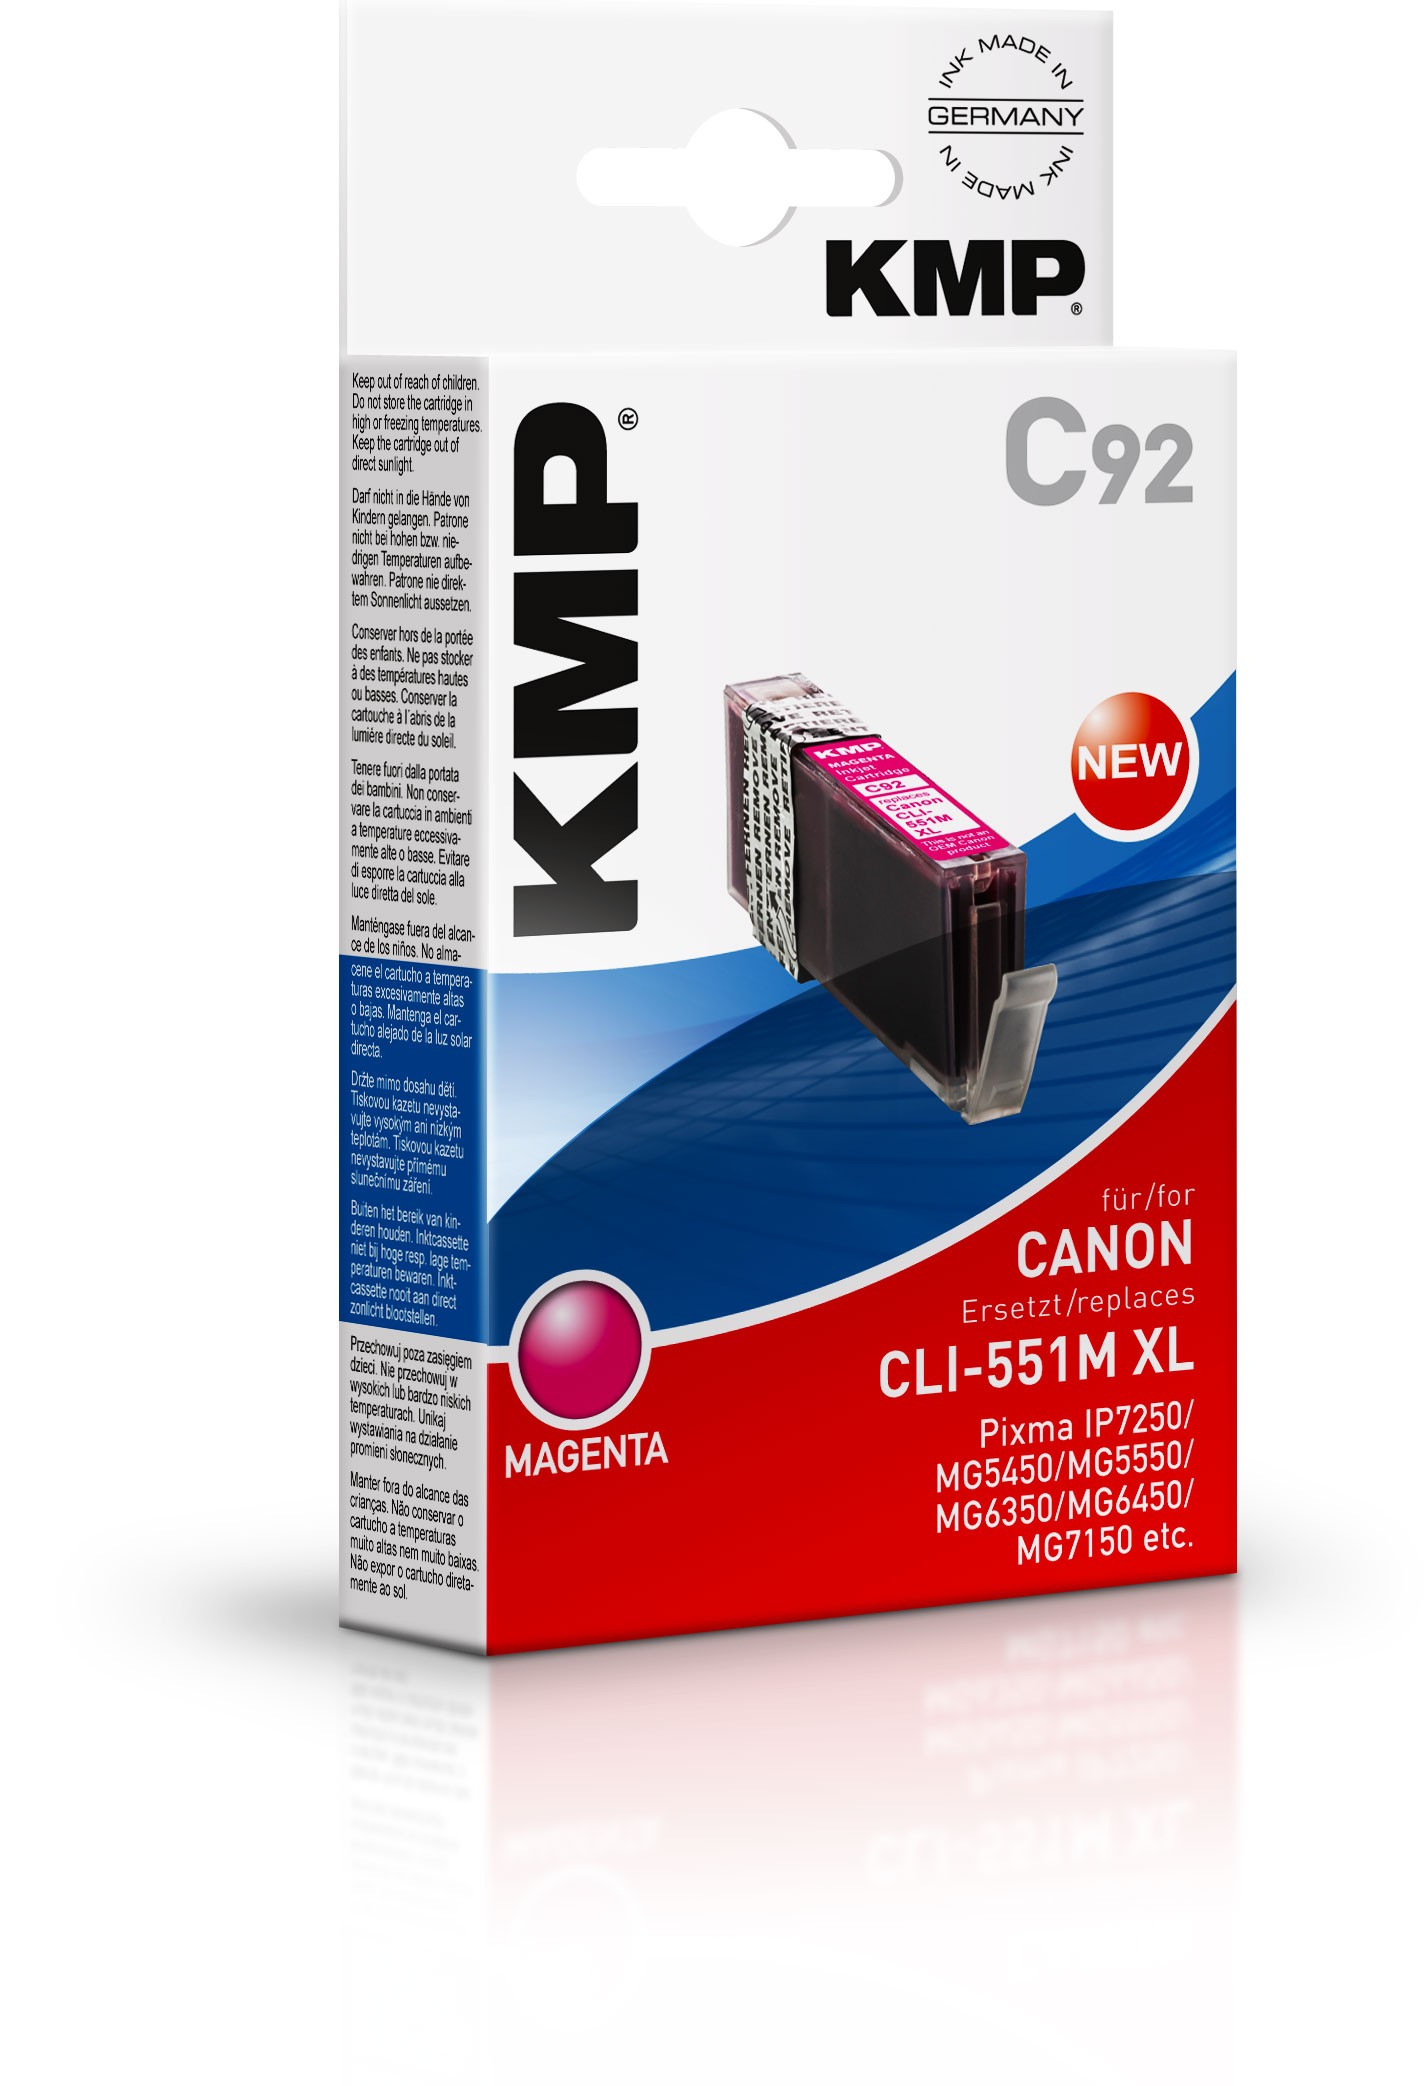 KMP C92 single pack / magenta